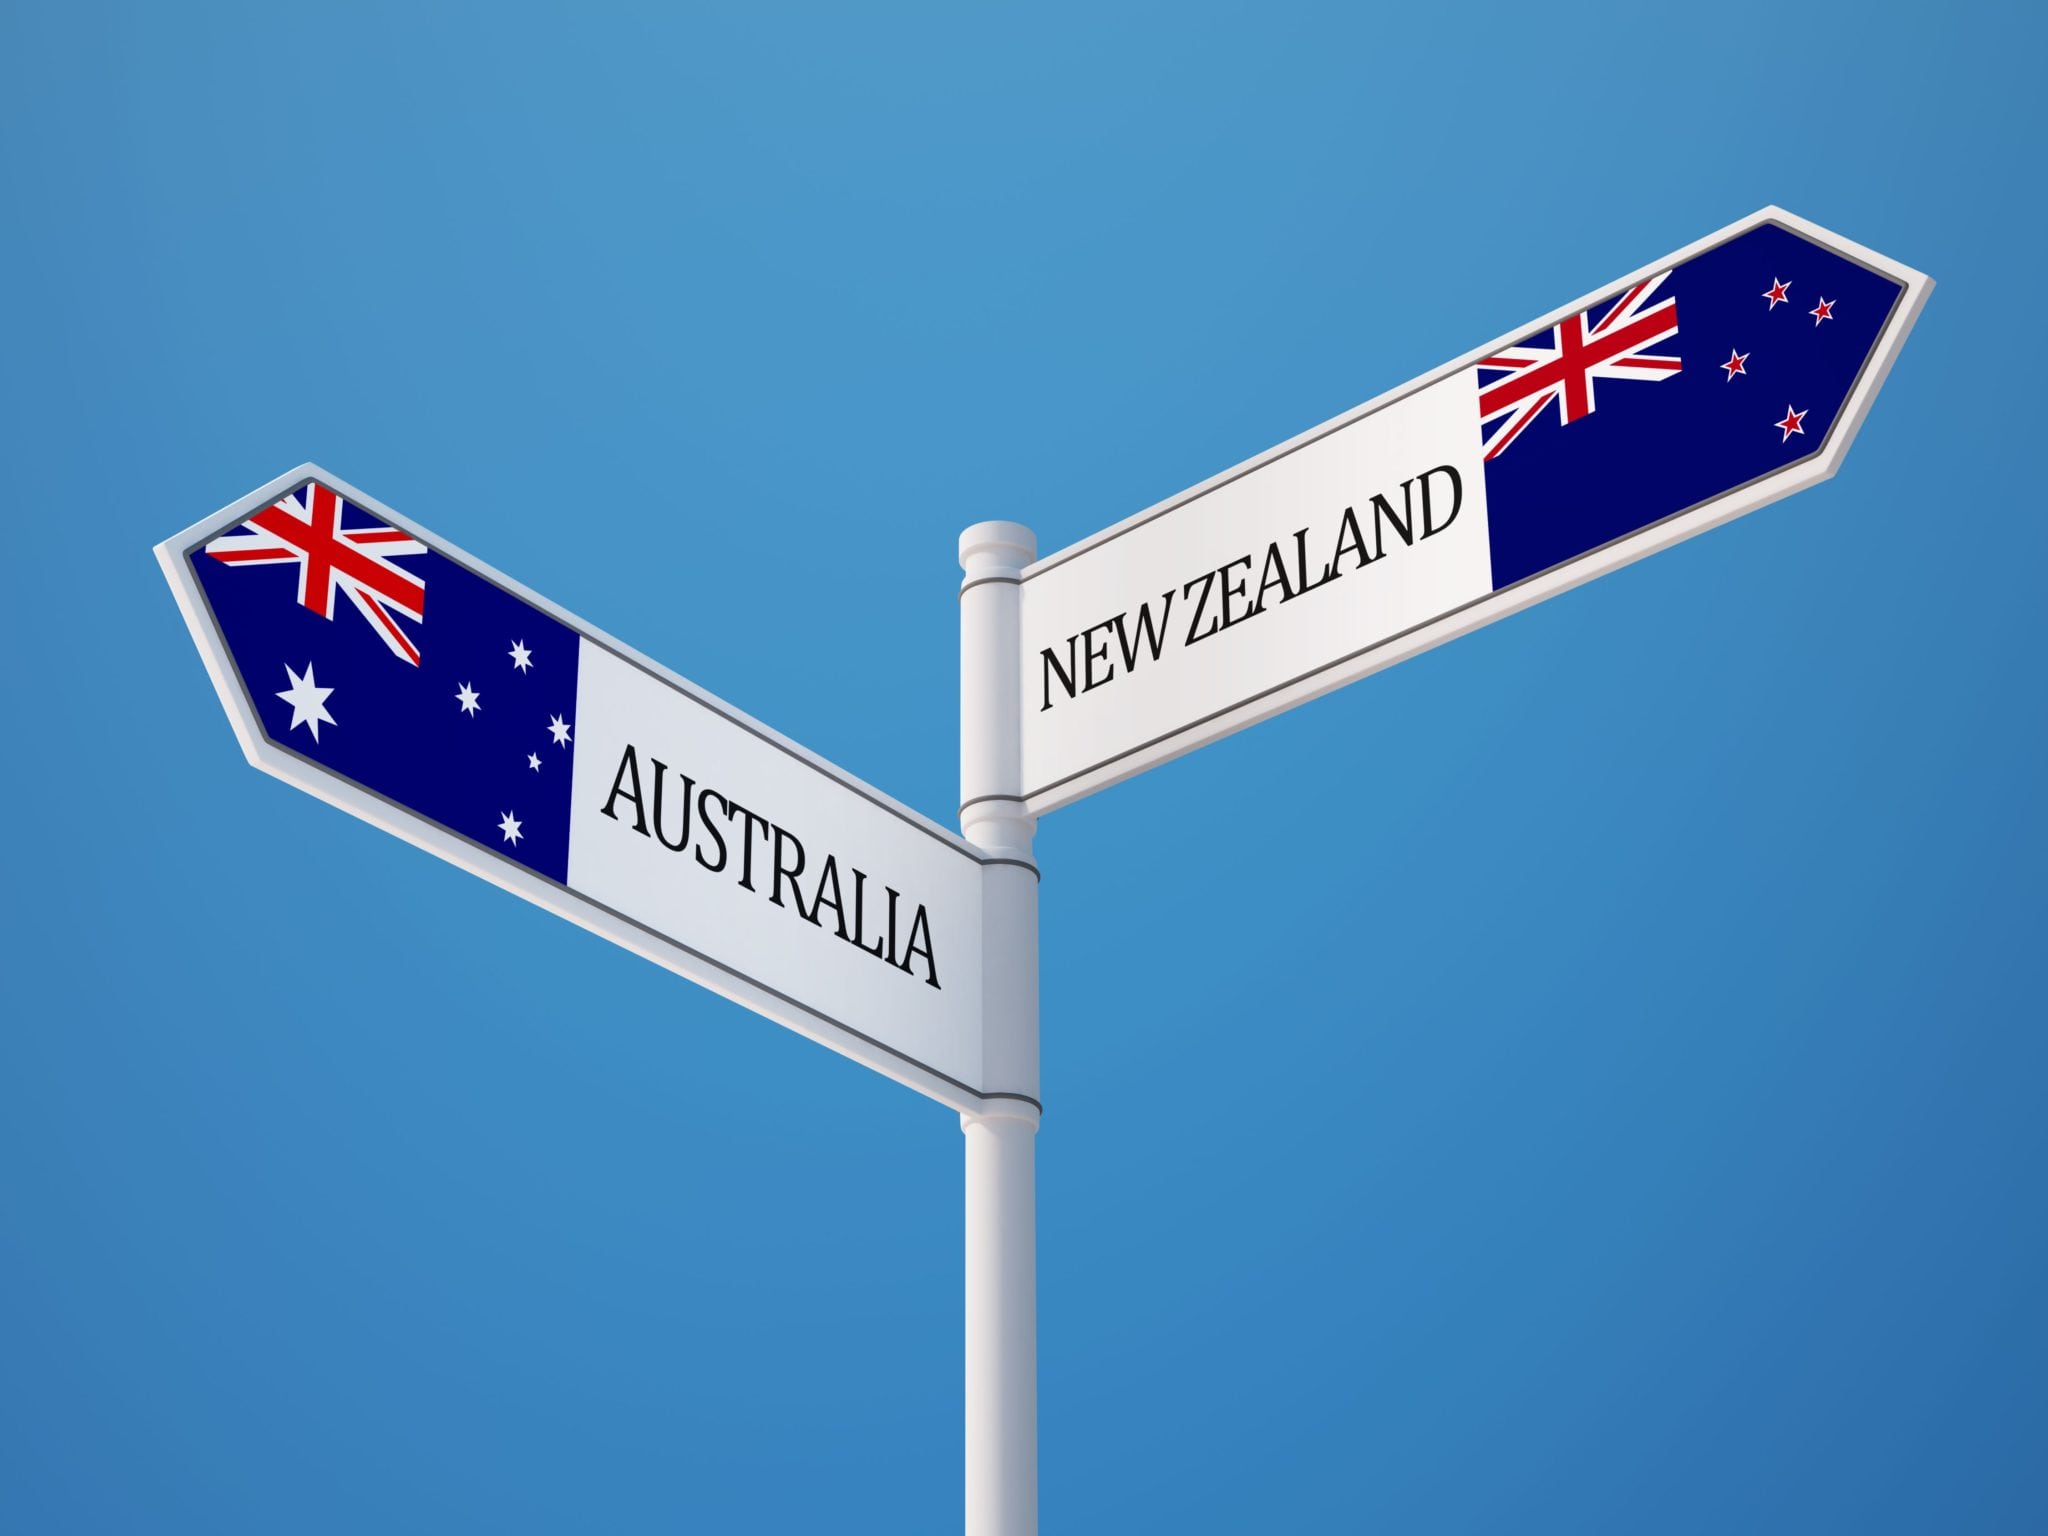 Where Are You Australia & New Zealand SMEs?